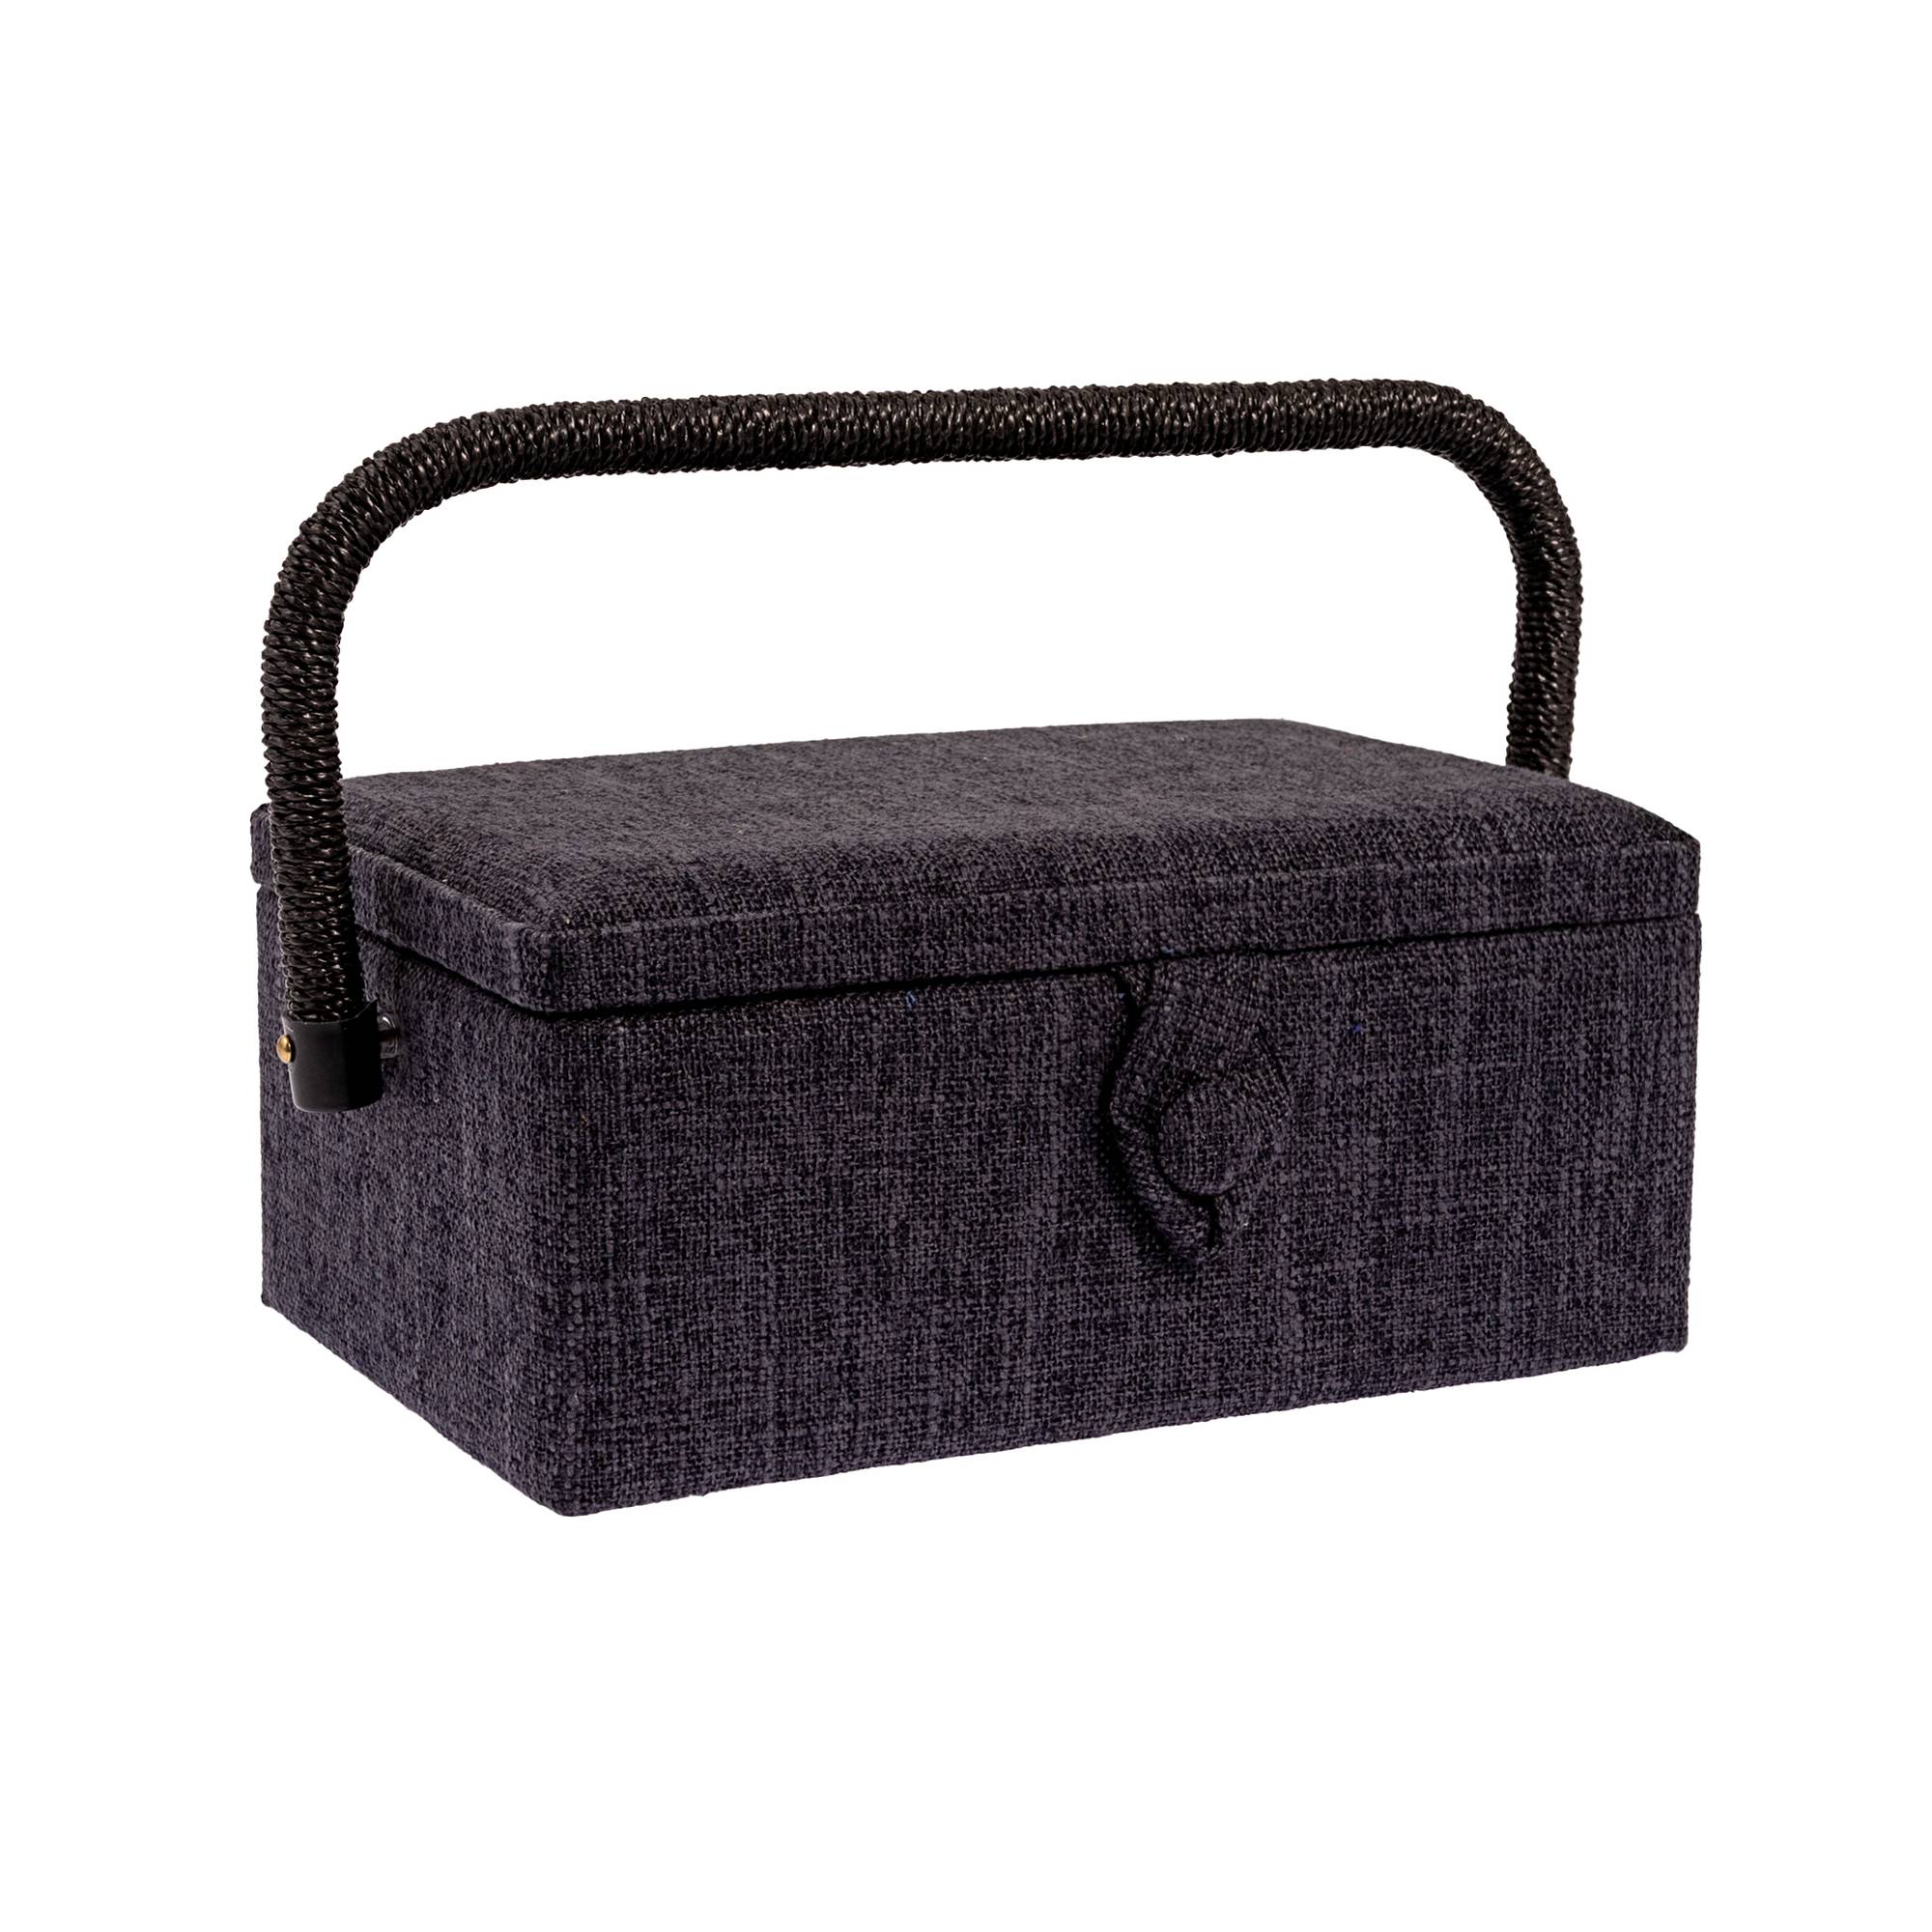 Charcoal Sewing Box